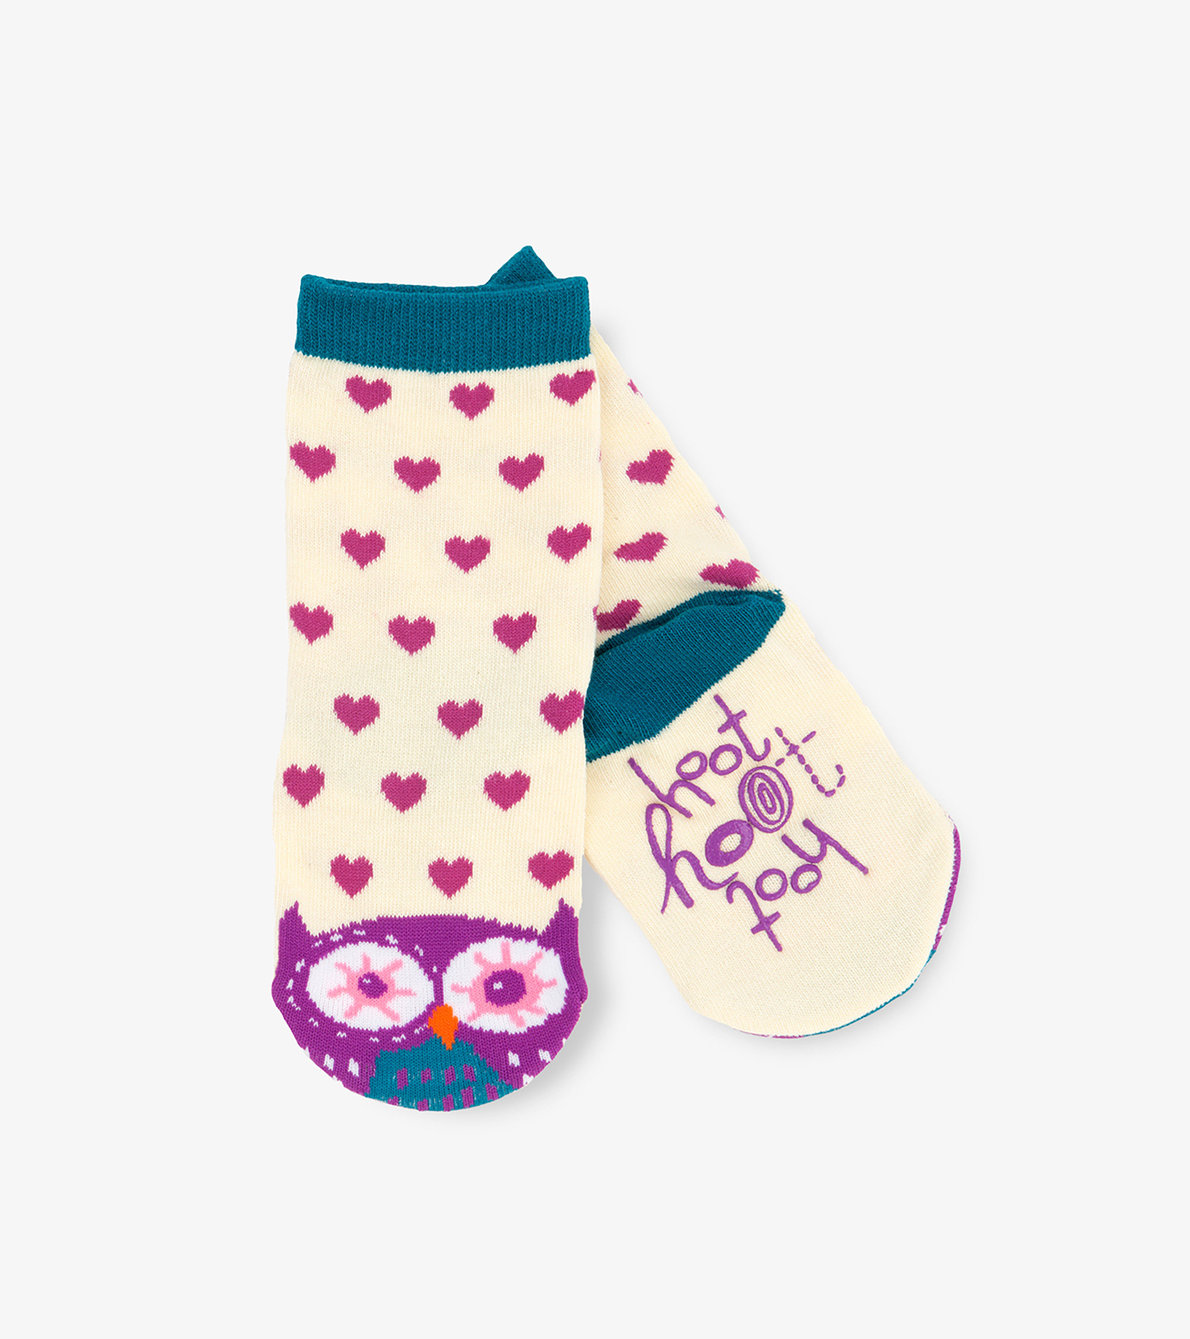 View larger image of Hoot Hoot Kids Animal Socks